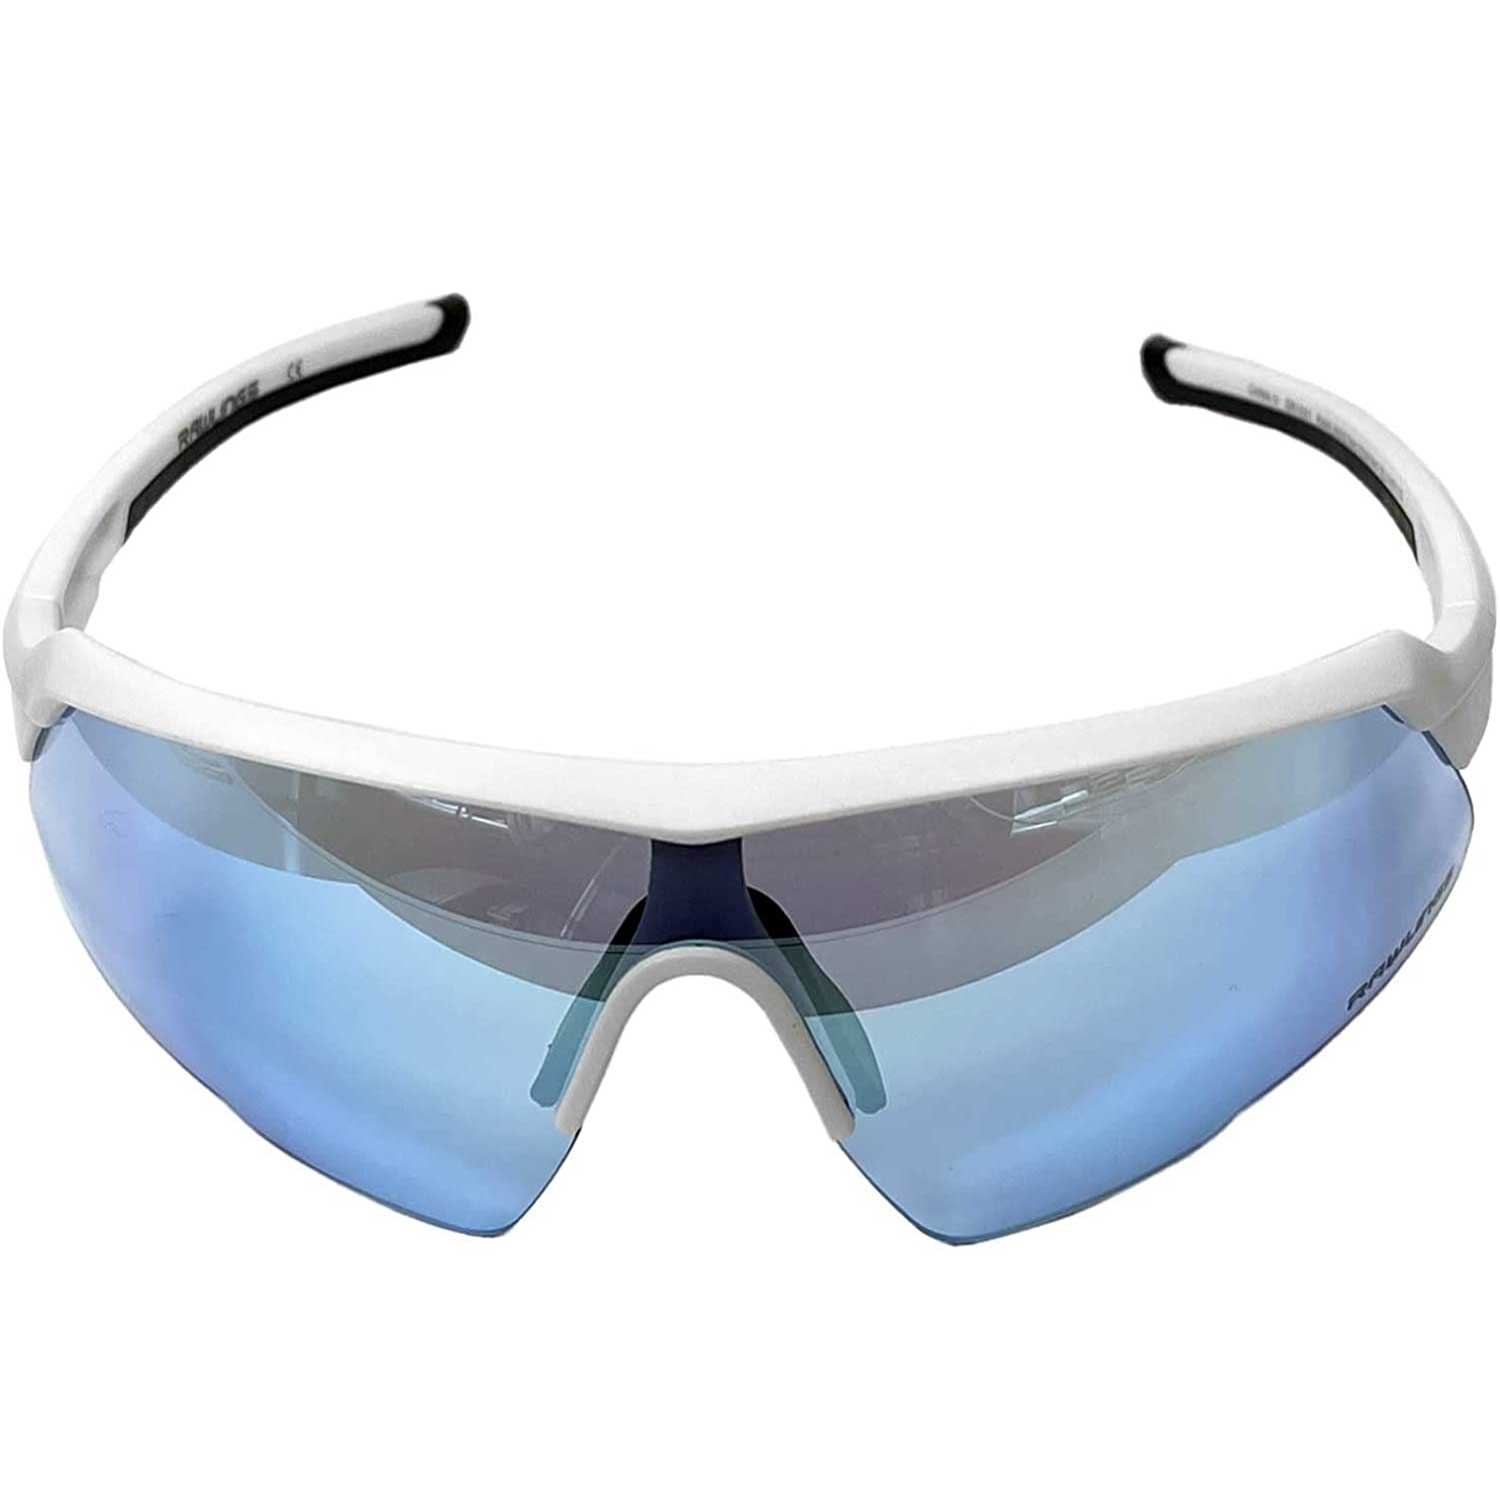 Rawlings LTS 10260971 Adult Sunglasses White/Blue Mirror Lens